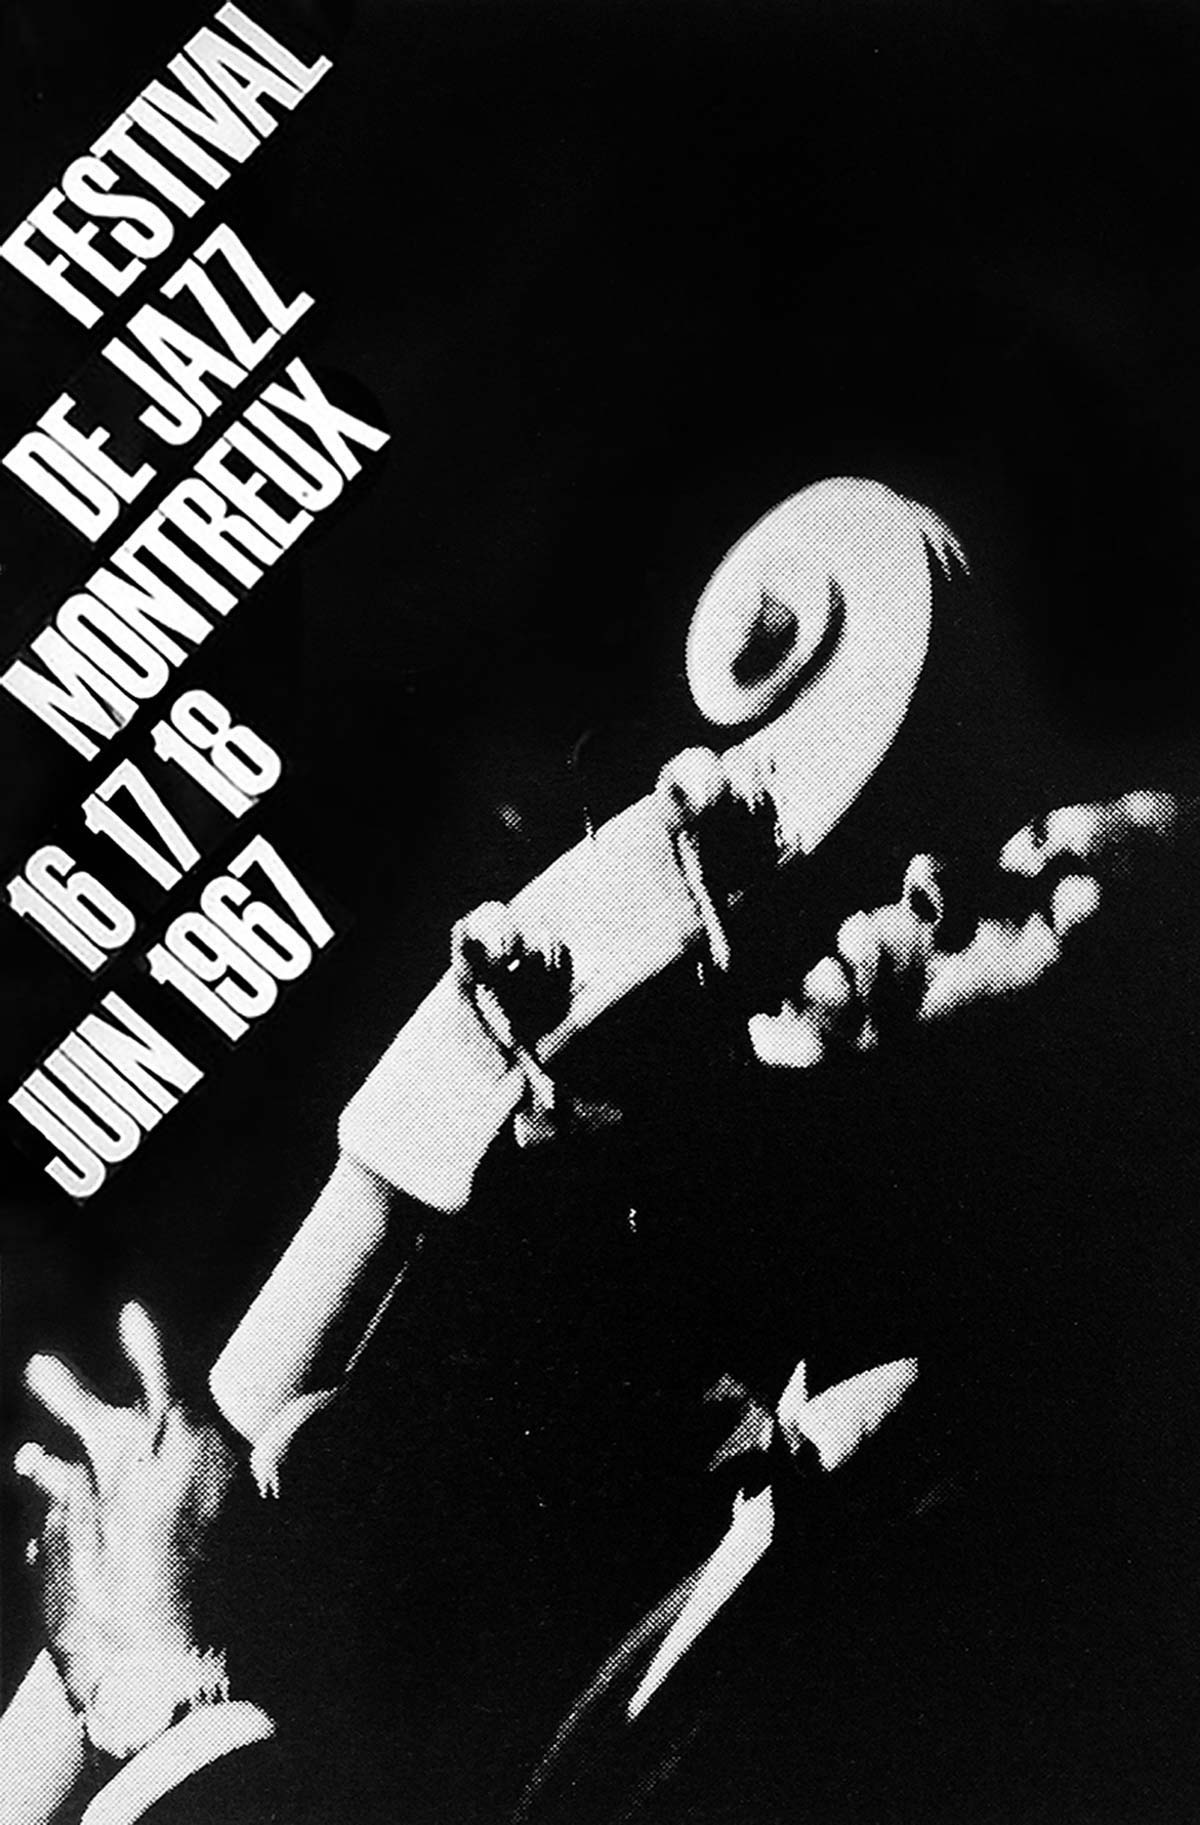 Festival de Jazz Montreaux poster by Armando Milani, 1967